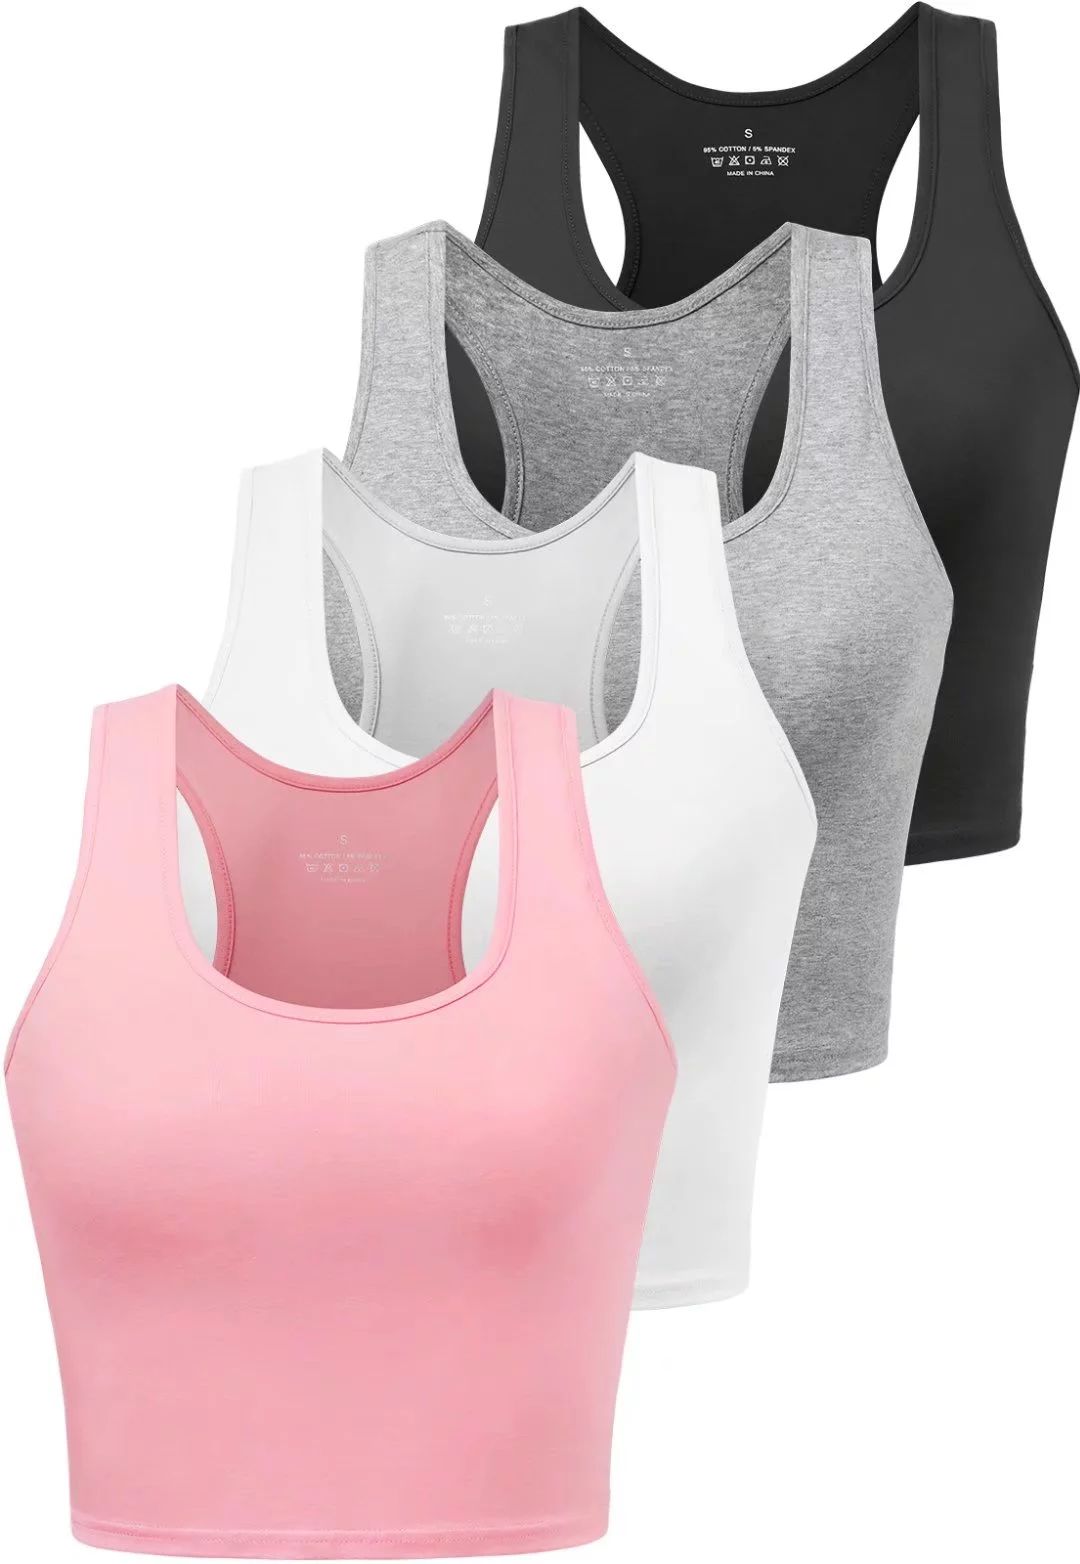 Joviren Cotton Workout Crop Top for Women Racerback Yoga Tank Tops Athletic Sports Shirts Exercis... | Walmart (US)